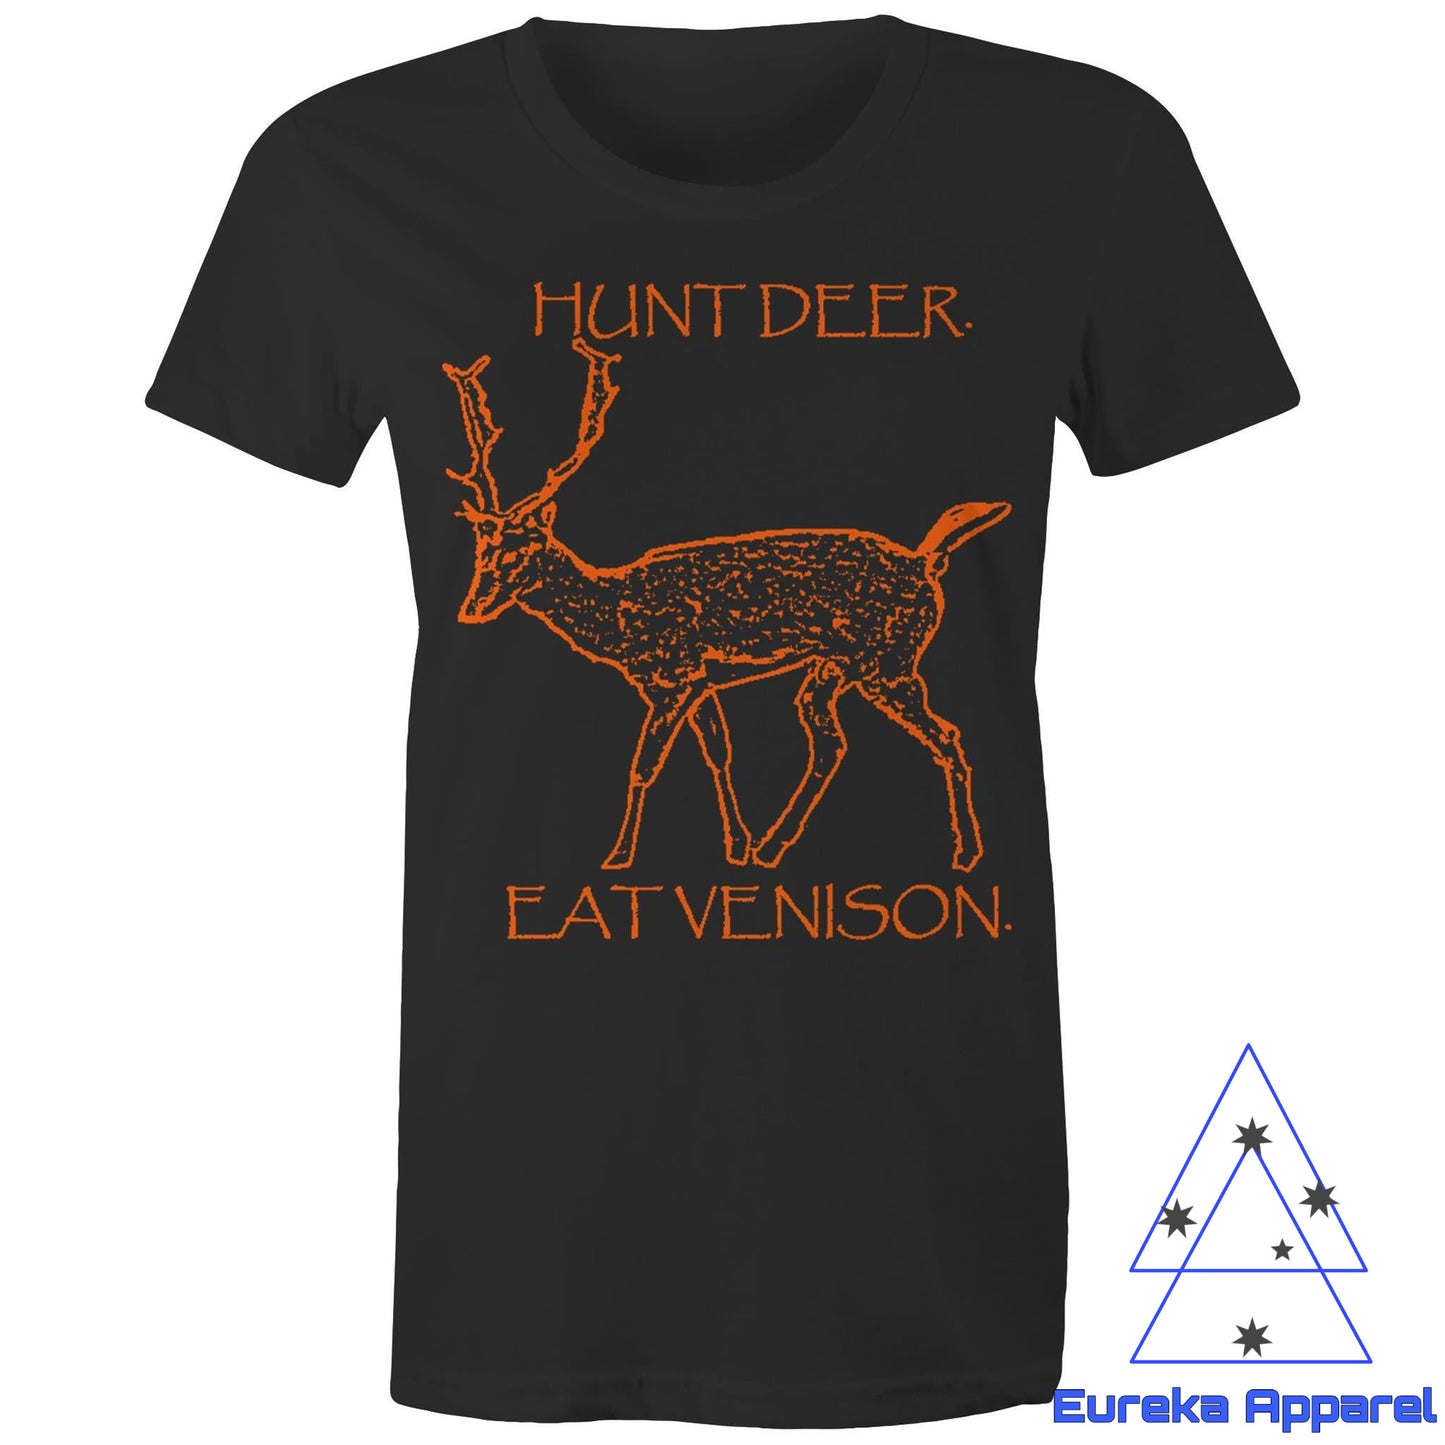 Hunt Deer and Eat Venison. Women's AS Color 100% cotton maple tee